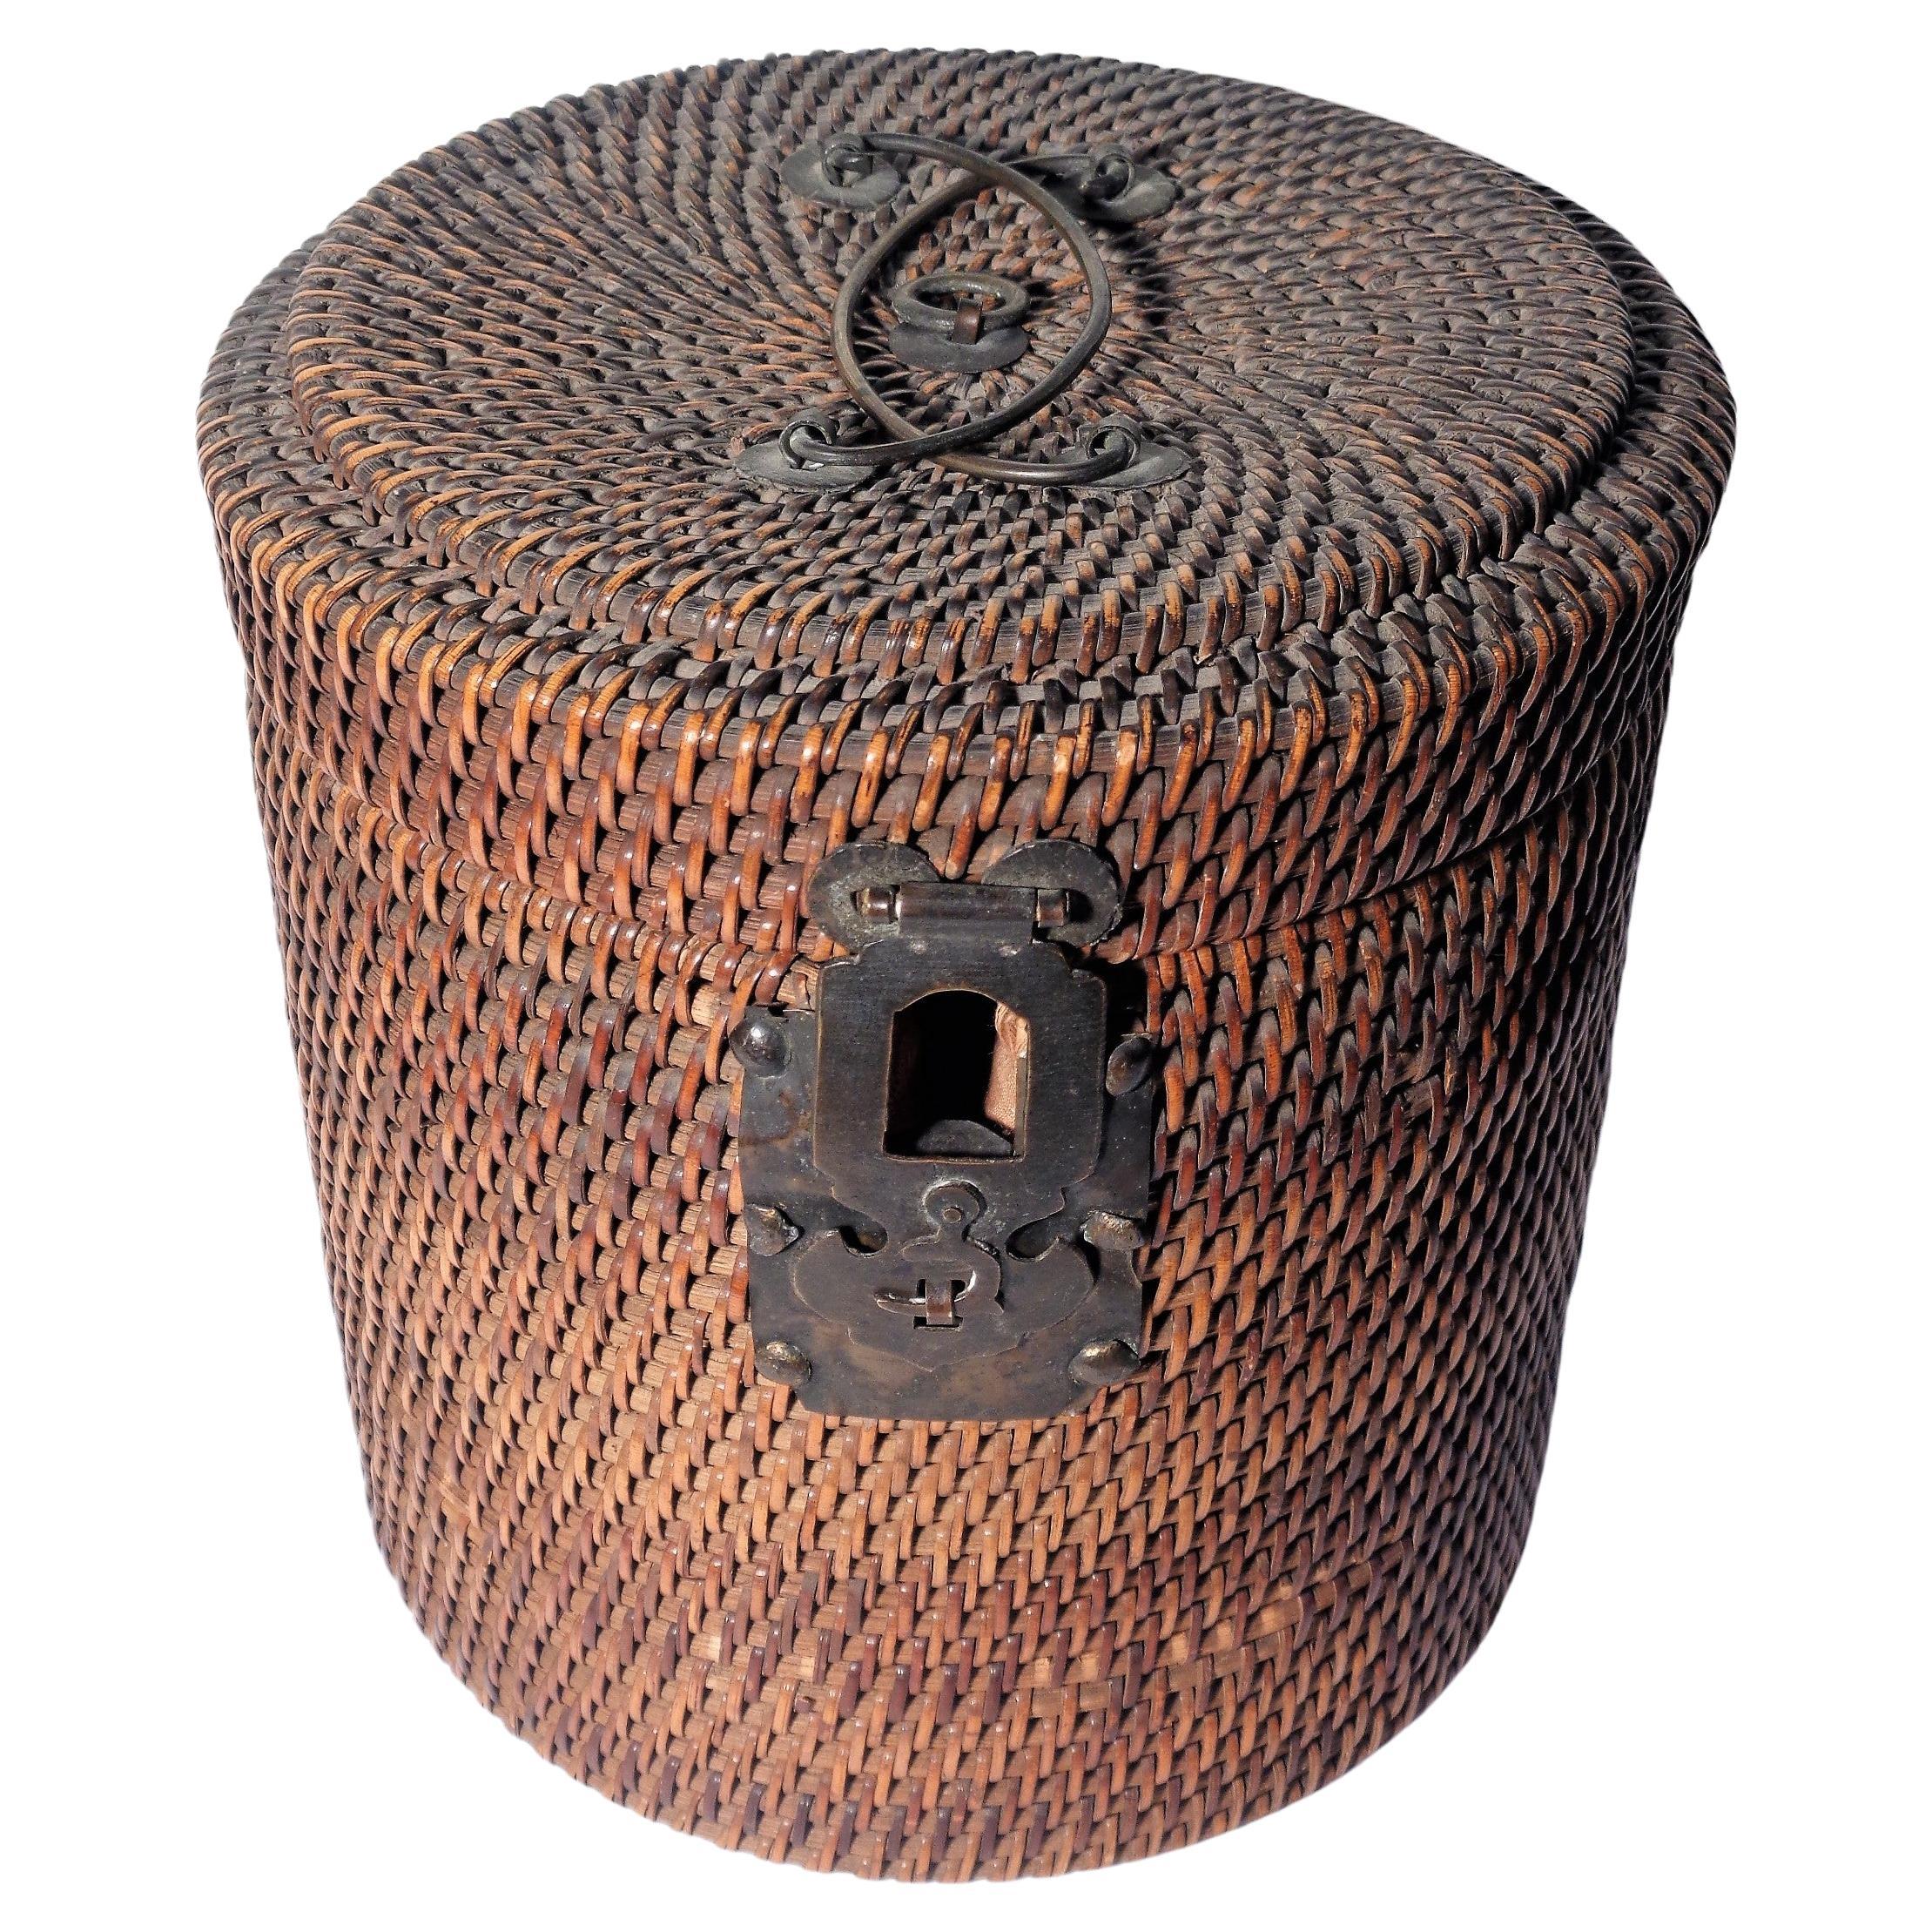  19th Century Chinese Woven Wicker Tea Pot Basket